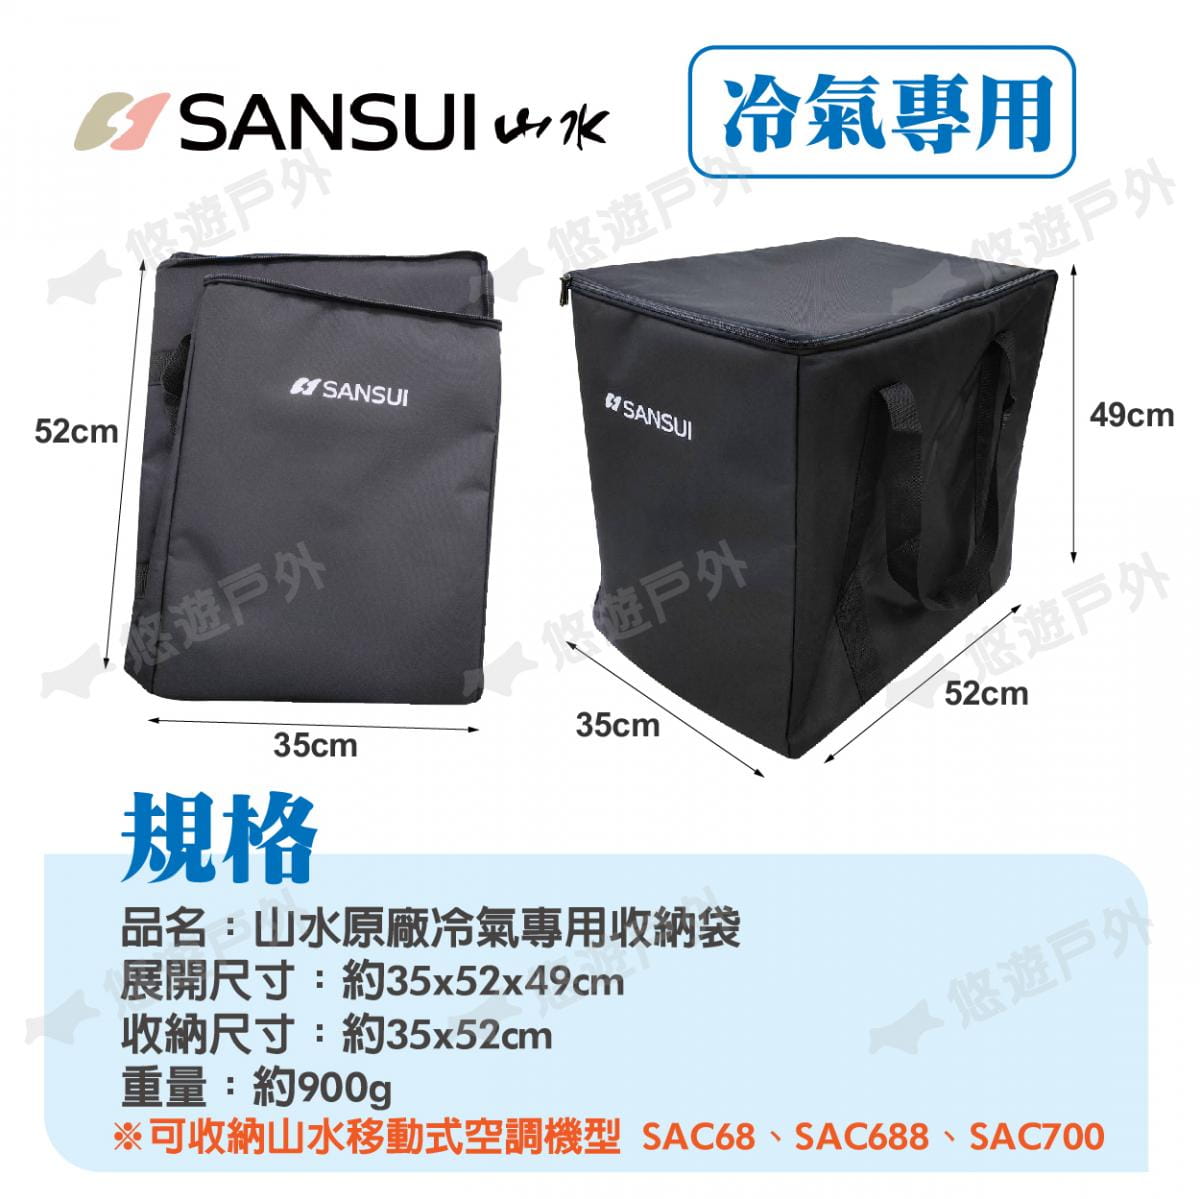 【SANSUI山水】冷氣專用收納袋 SAC68 SAC688 SAC700 5